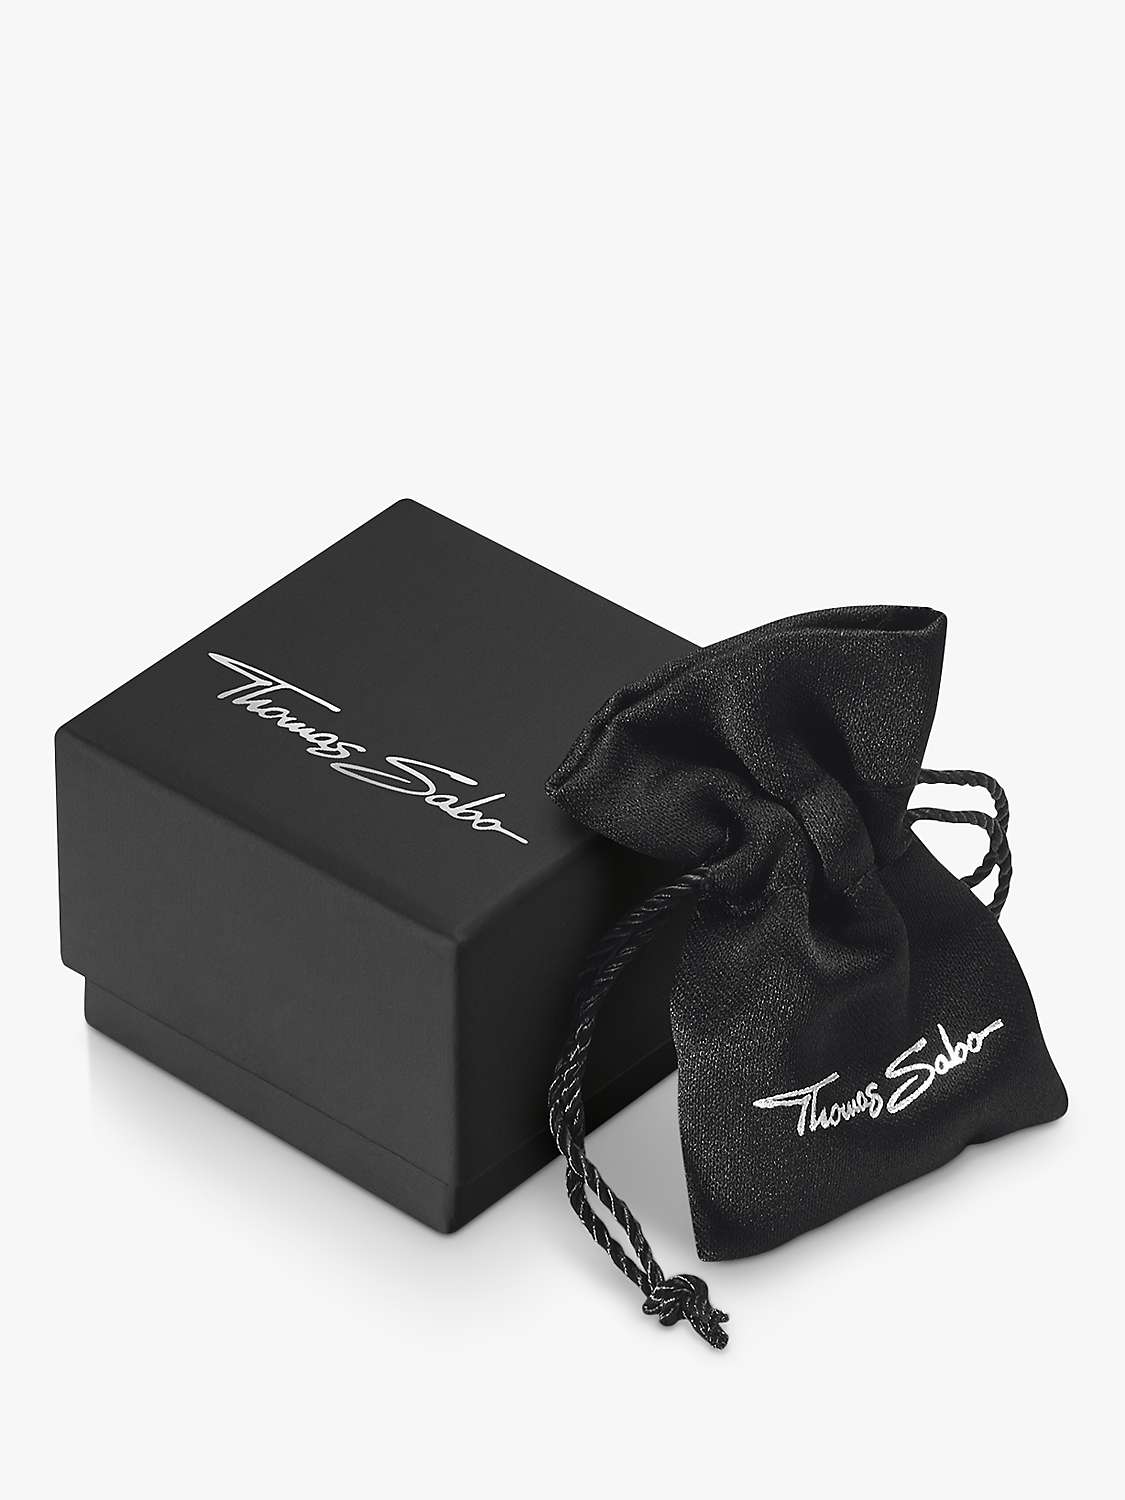 Buy THOMAS SABO Men's Rebel Woven Leather Bracelet Online at johnlewis.com